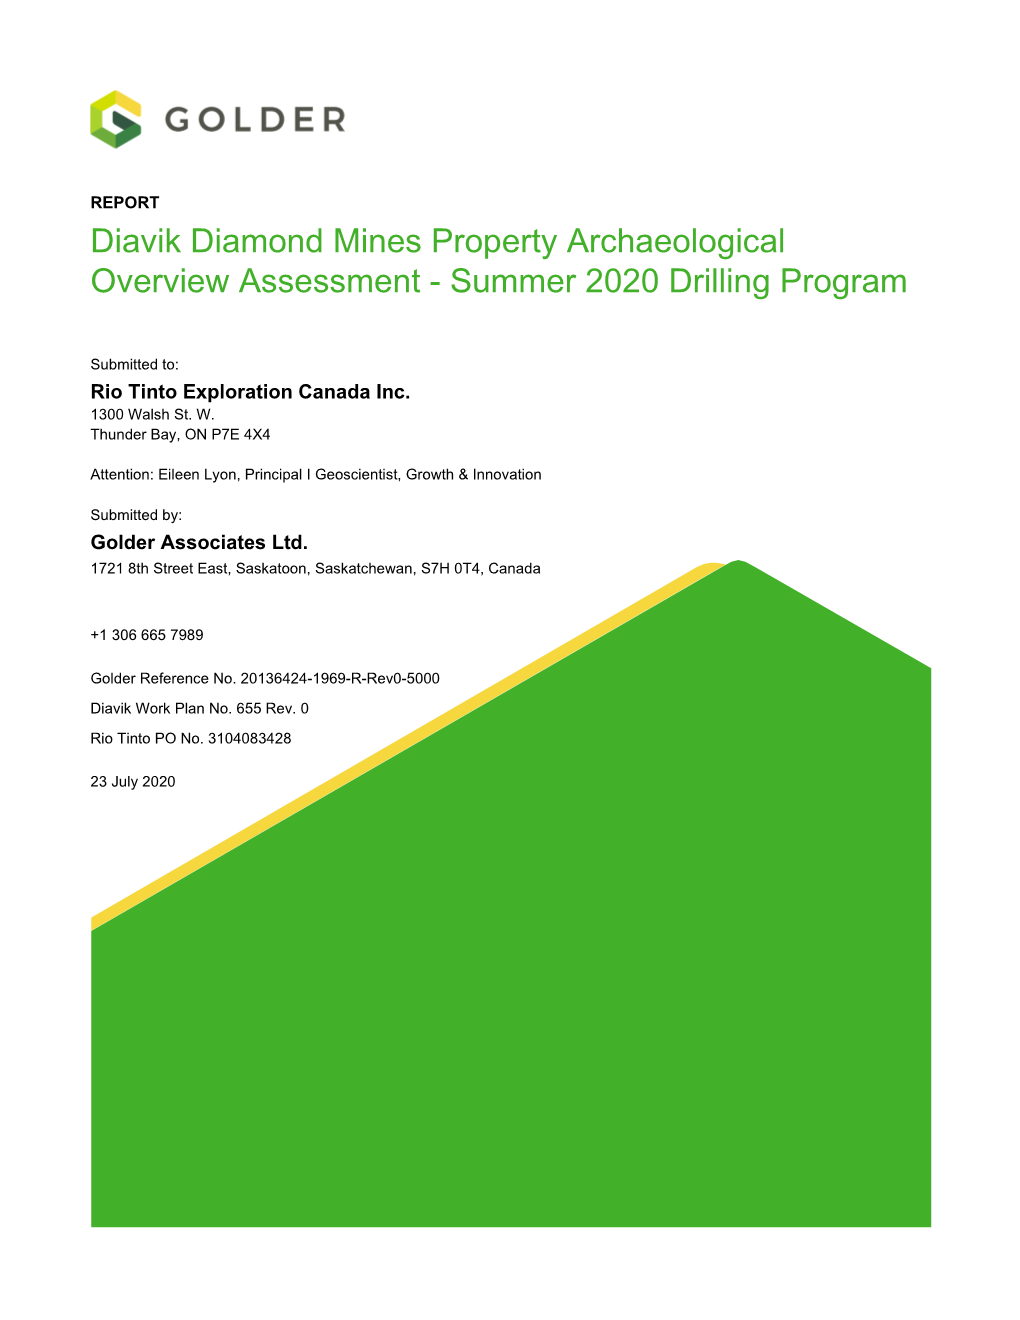 Diavik Diamond Mines Property Archaeological Overview Assessment - Summer 2020 Drilling Program